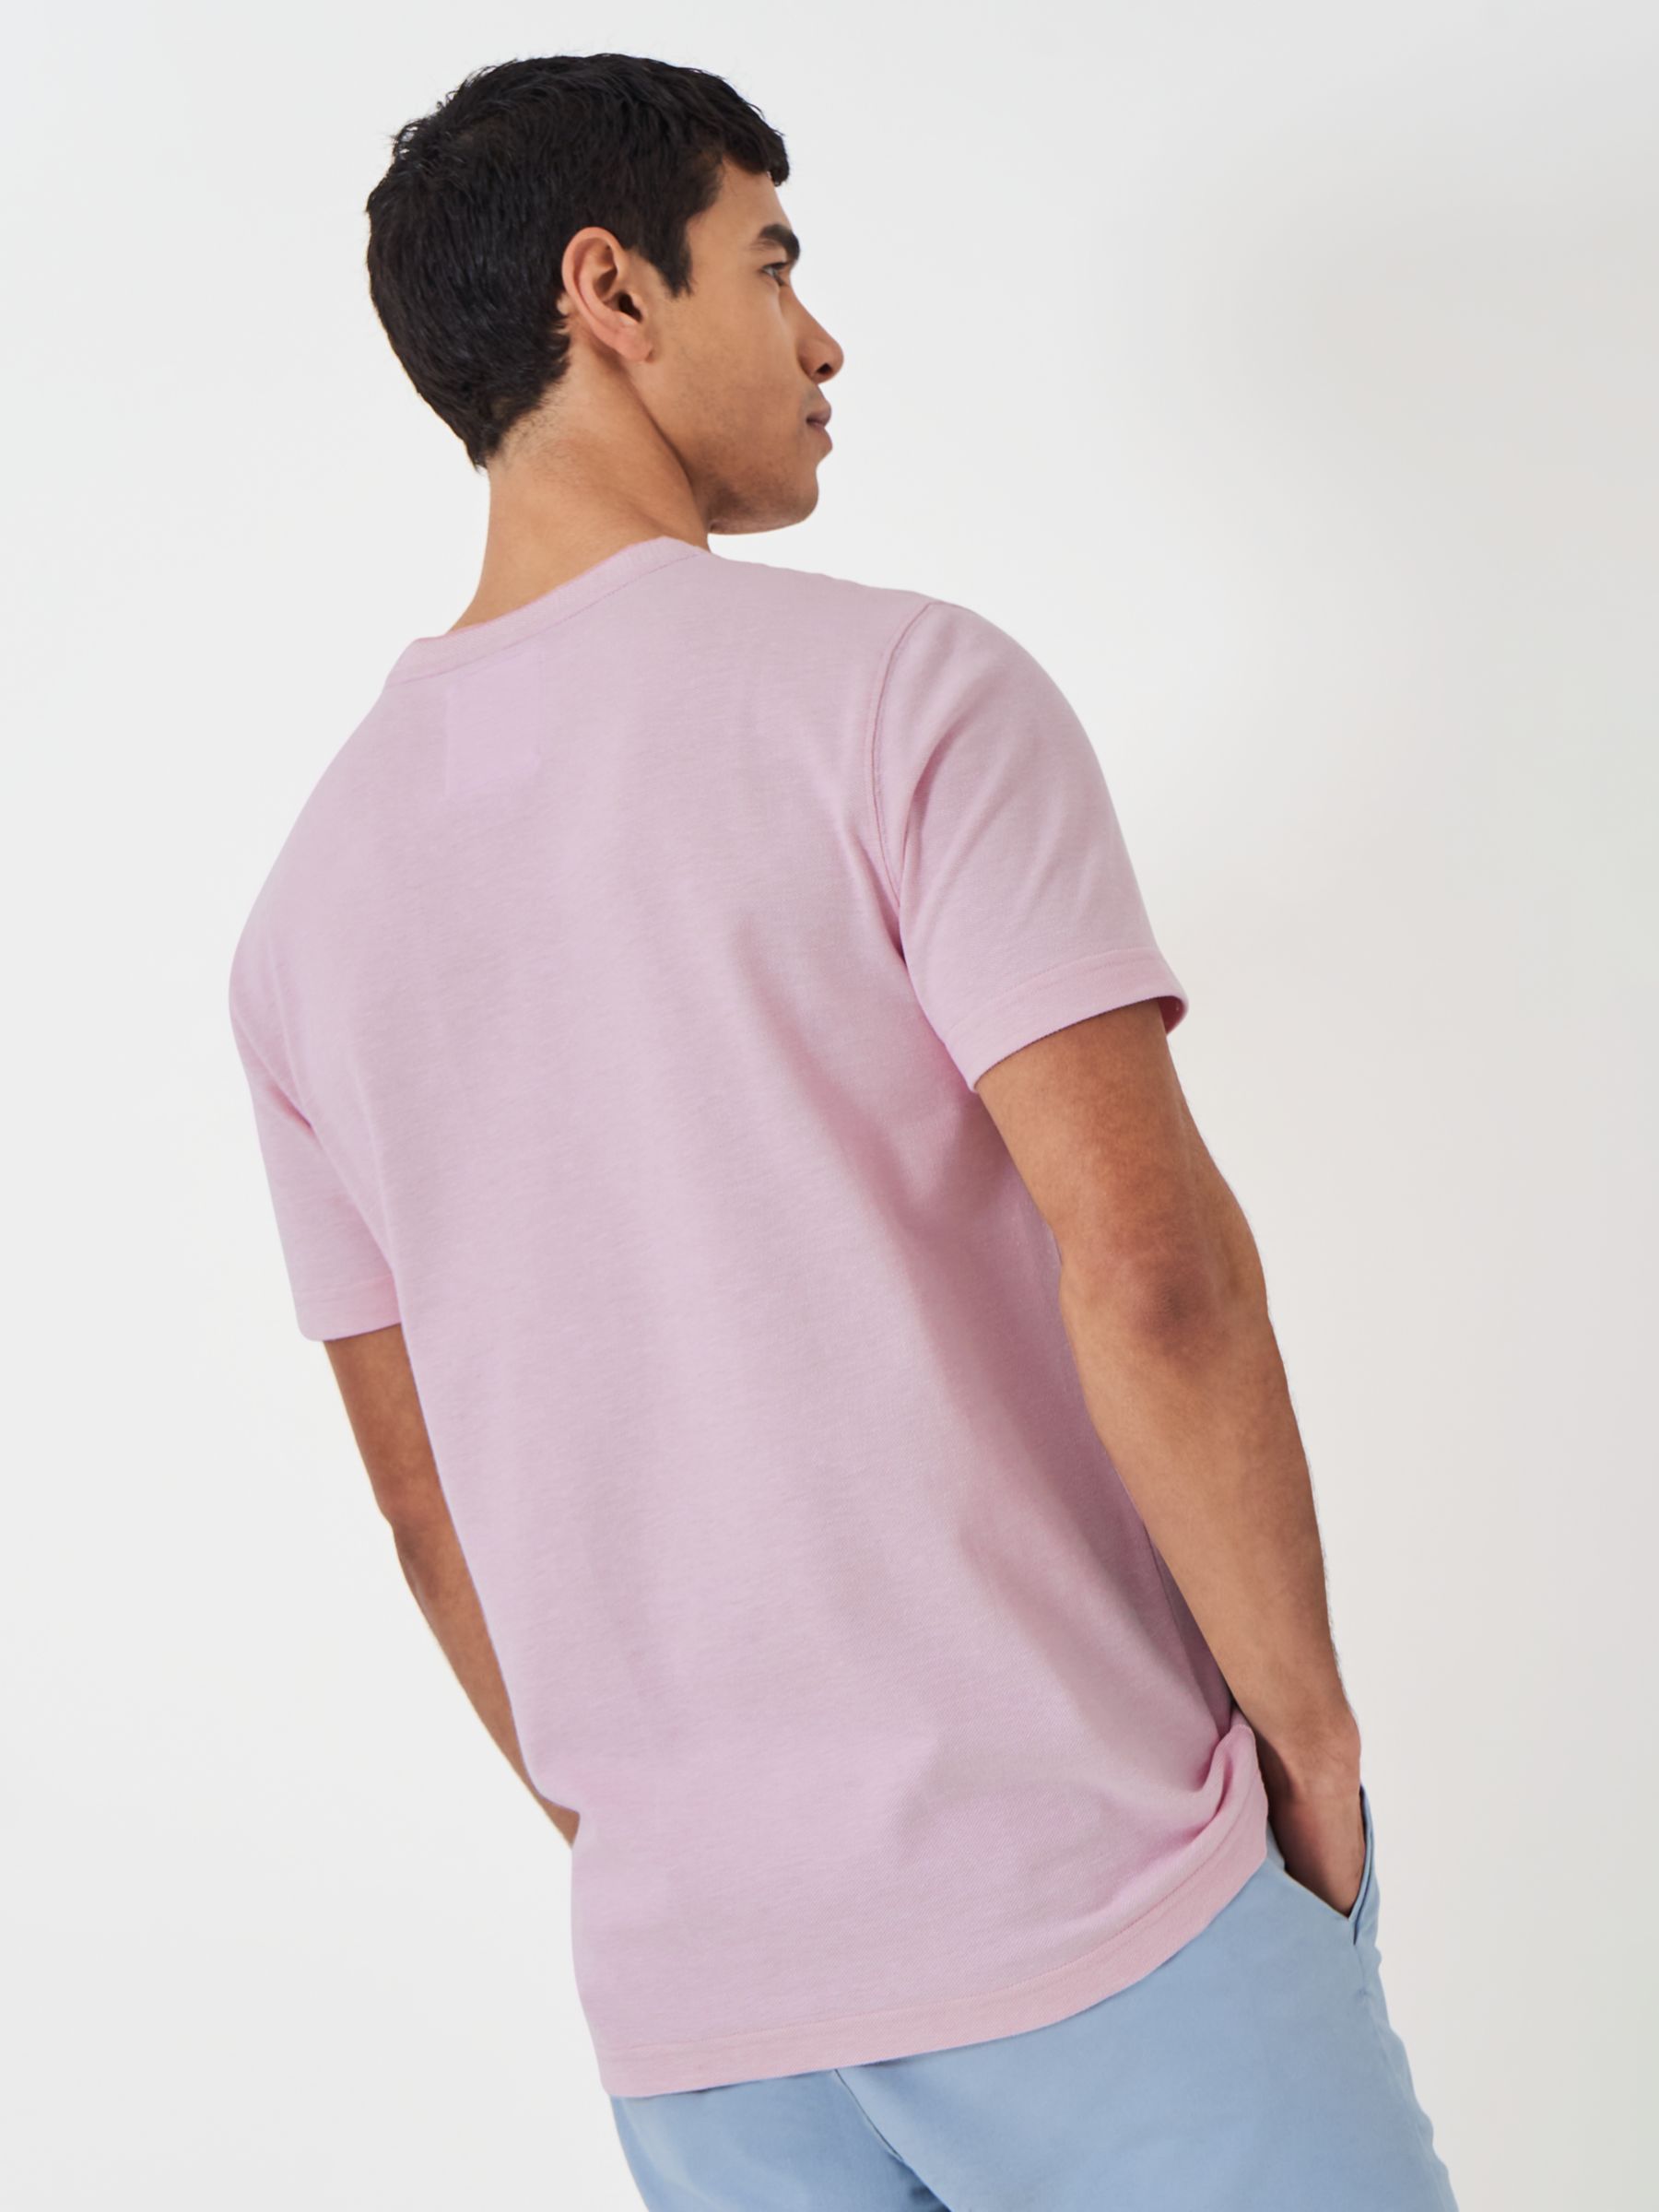 Crew Clothing Oxford Pique Short Sleeve T-Shirt, Light Pink, L